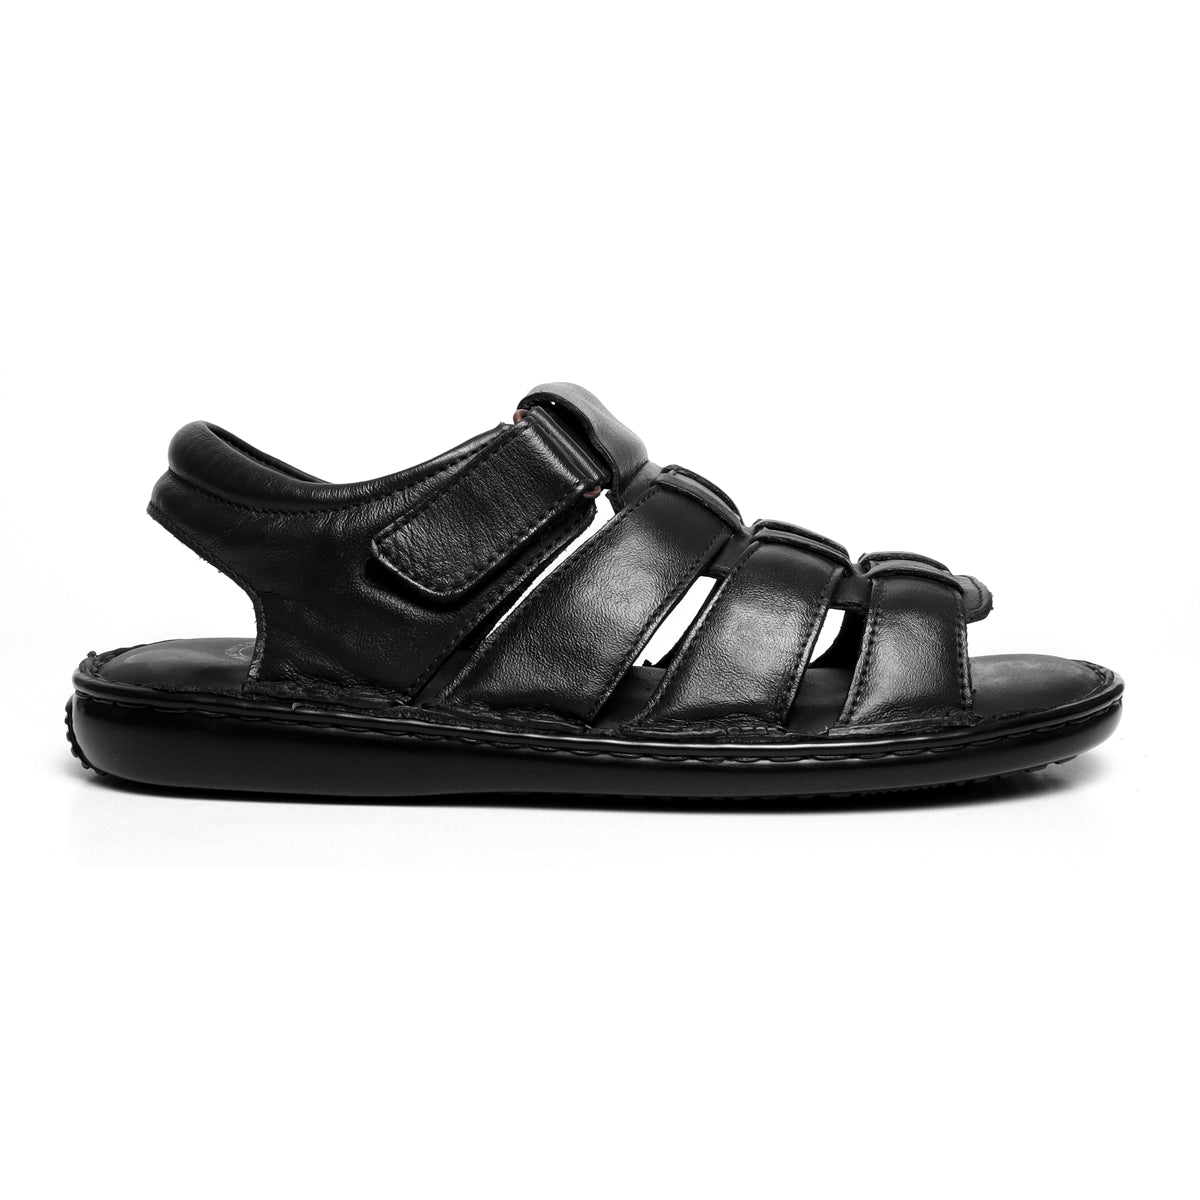 black leather sandals for men_ZS1